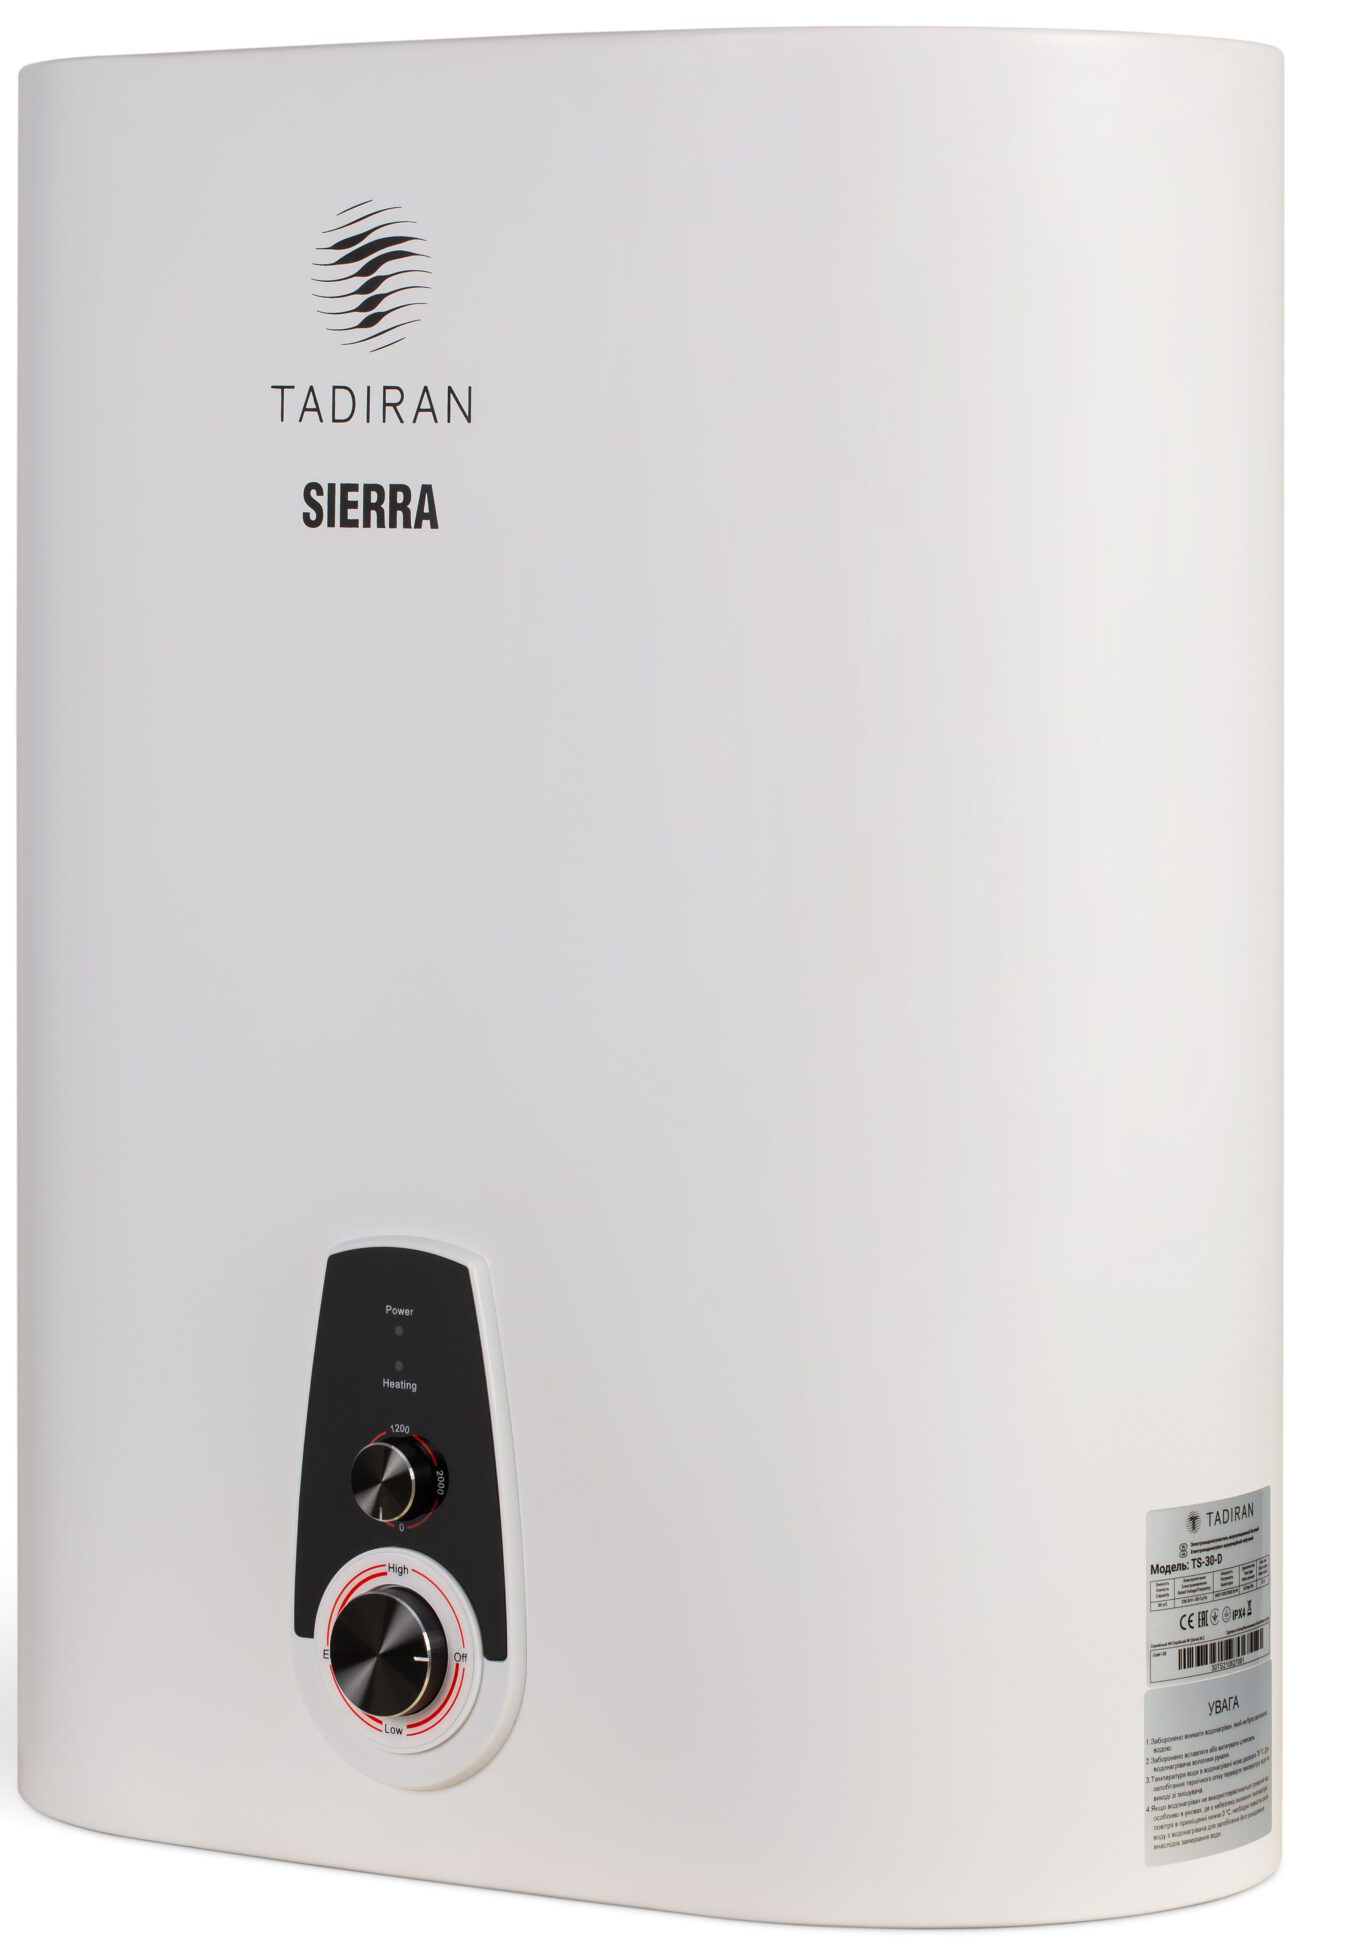 Бойлер Tadiran TS-30-D (Sierra) цена 0.00 грн - фотография 2